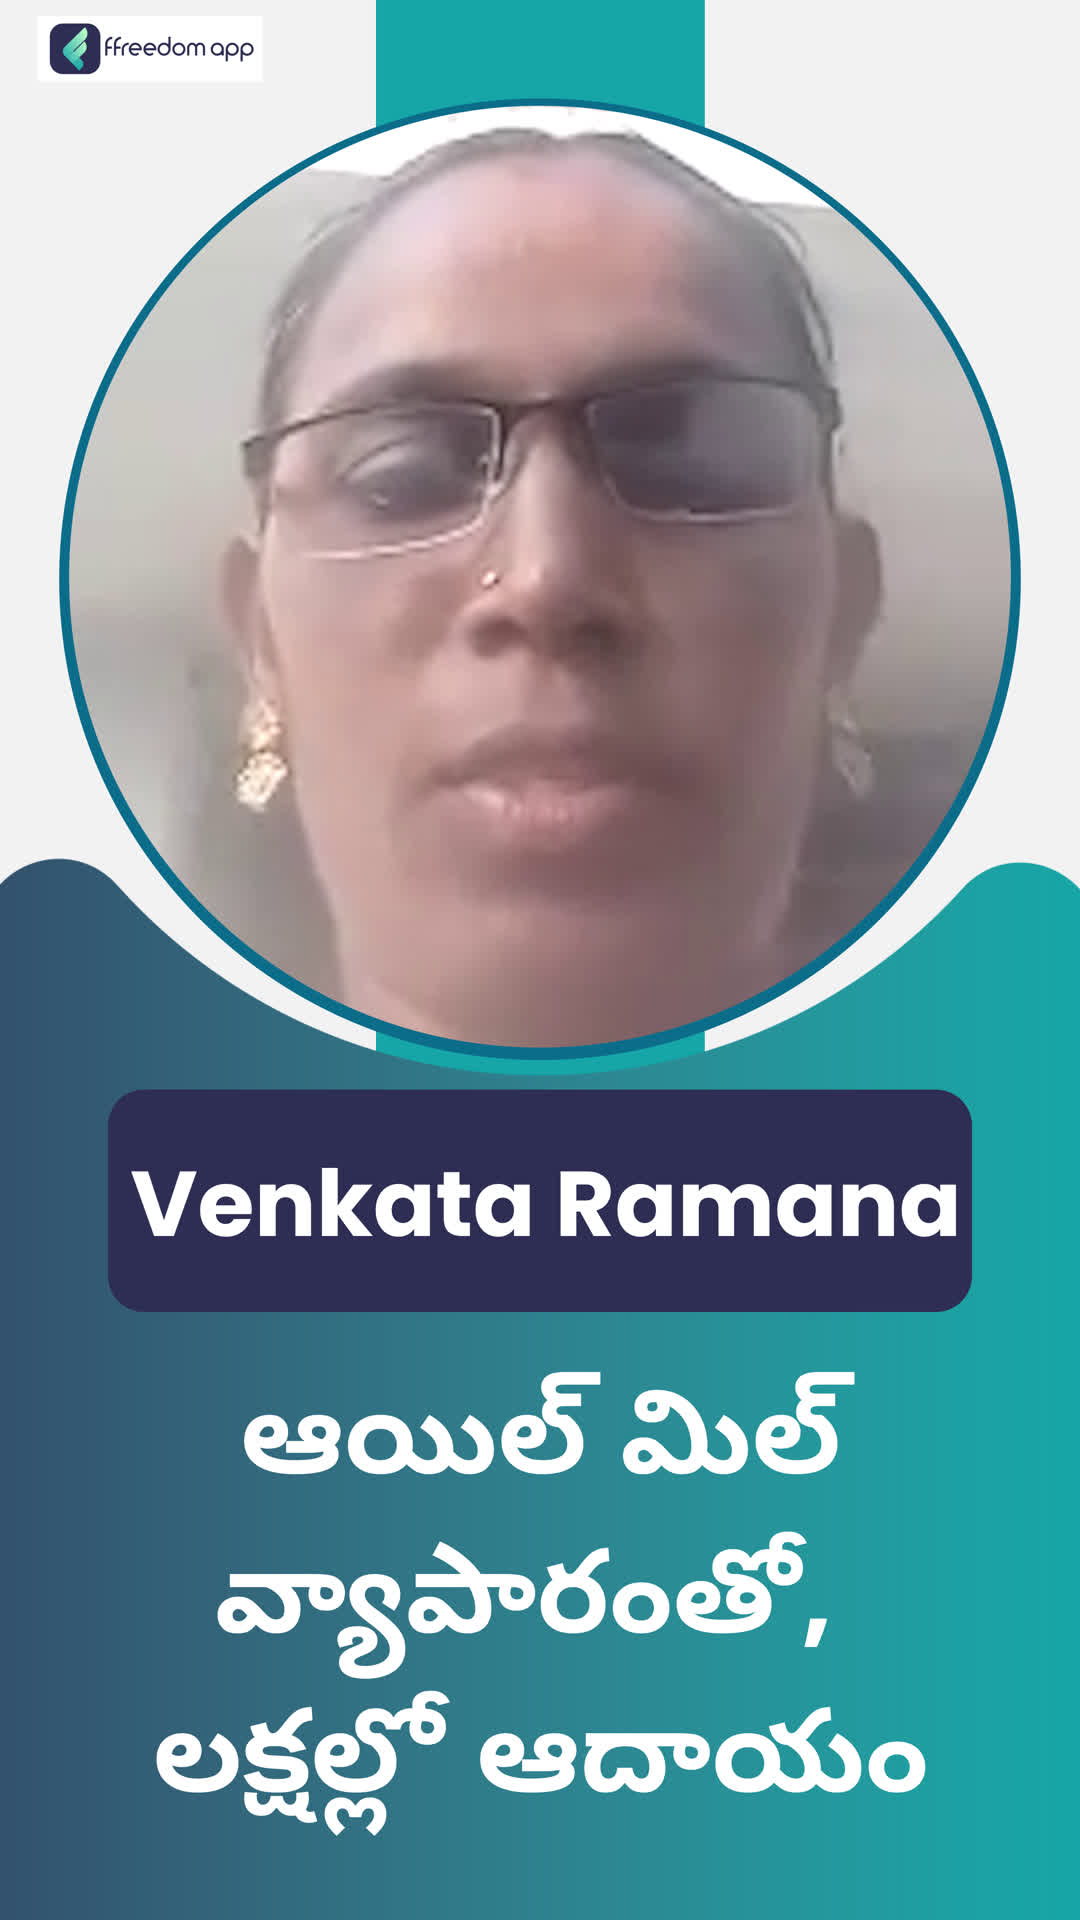 Pakiram.Venkata ramana's Honest Review of ffreedom app - West Godavari ,Tamil Nadu